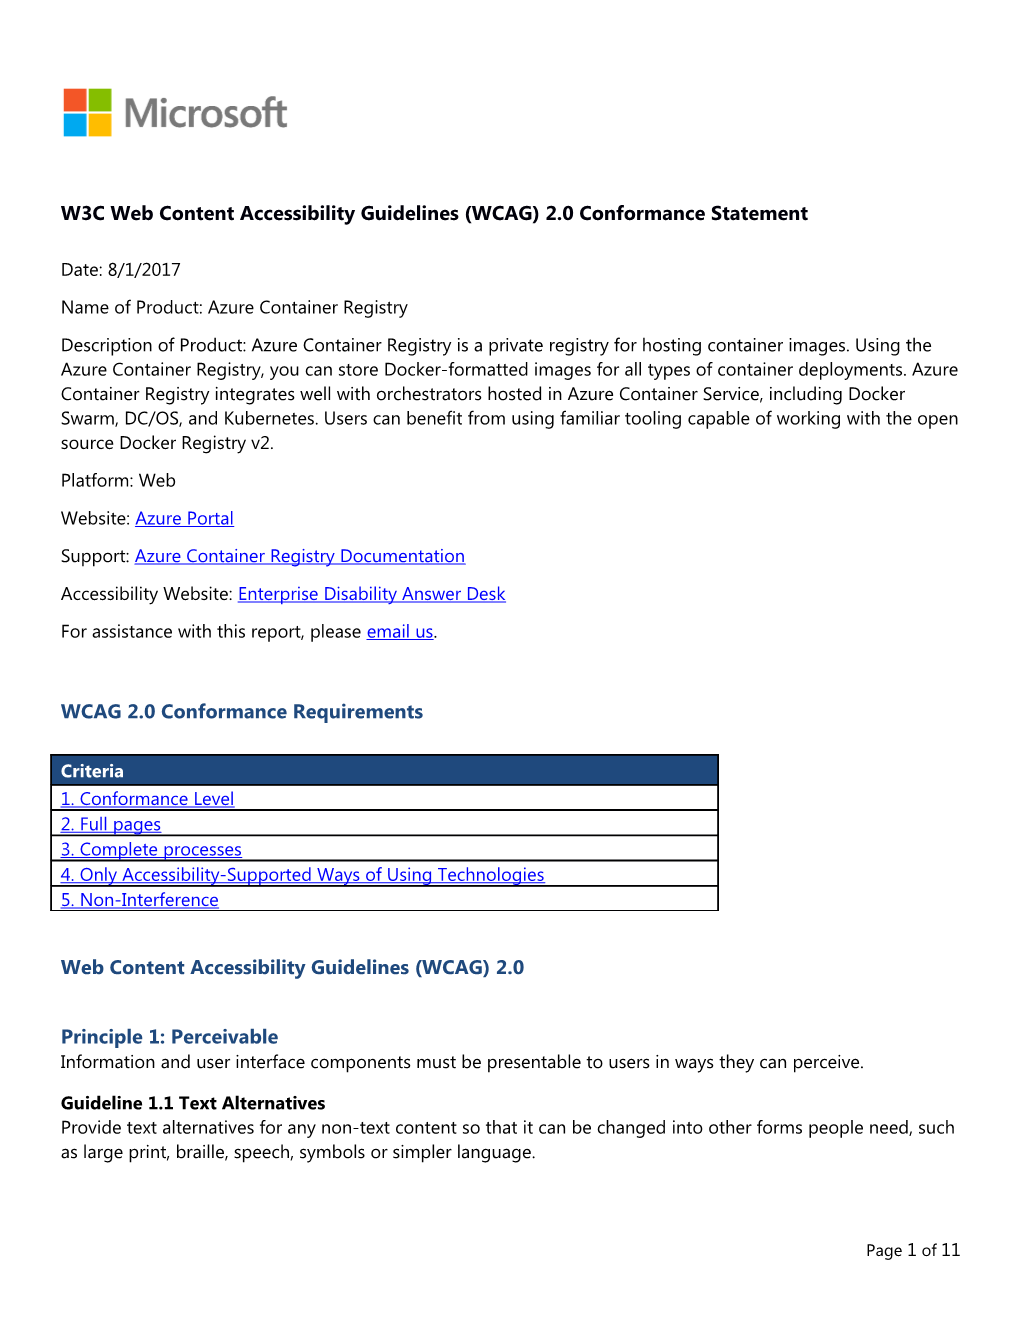 W3C Web Content Accessibility Guidelines (WCAG) 2.0 Conformance Statement s6